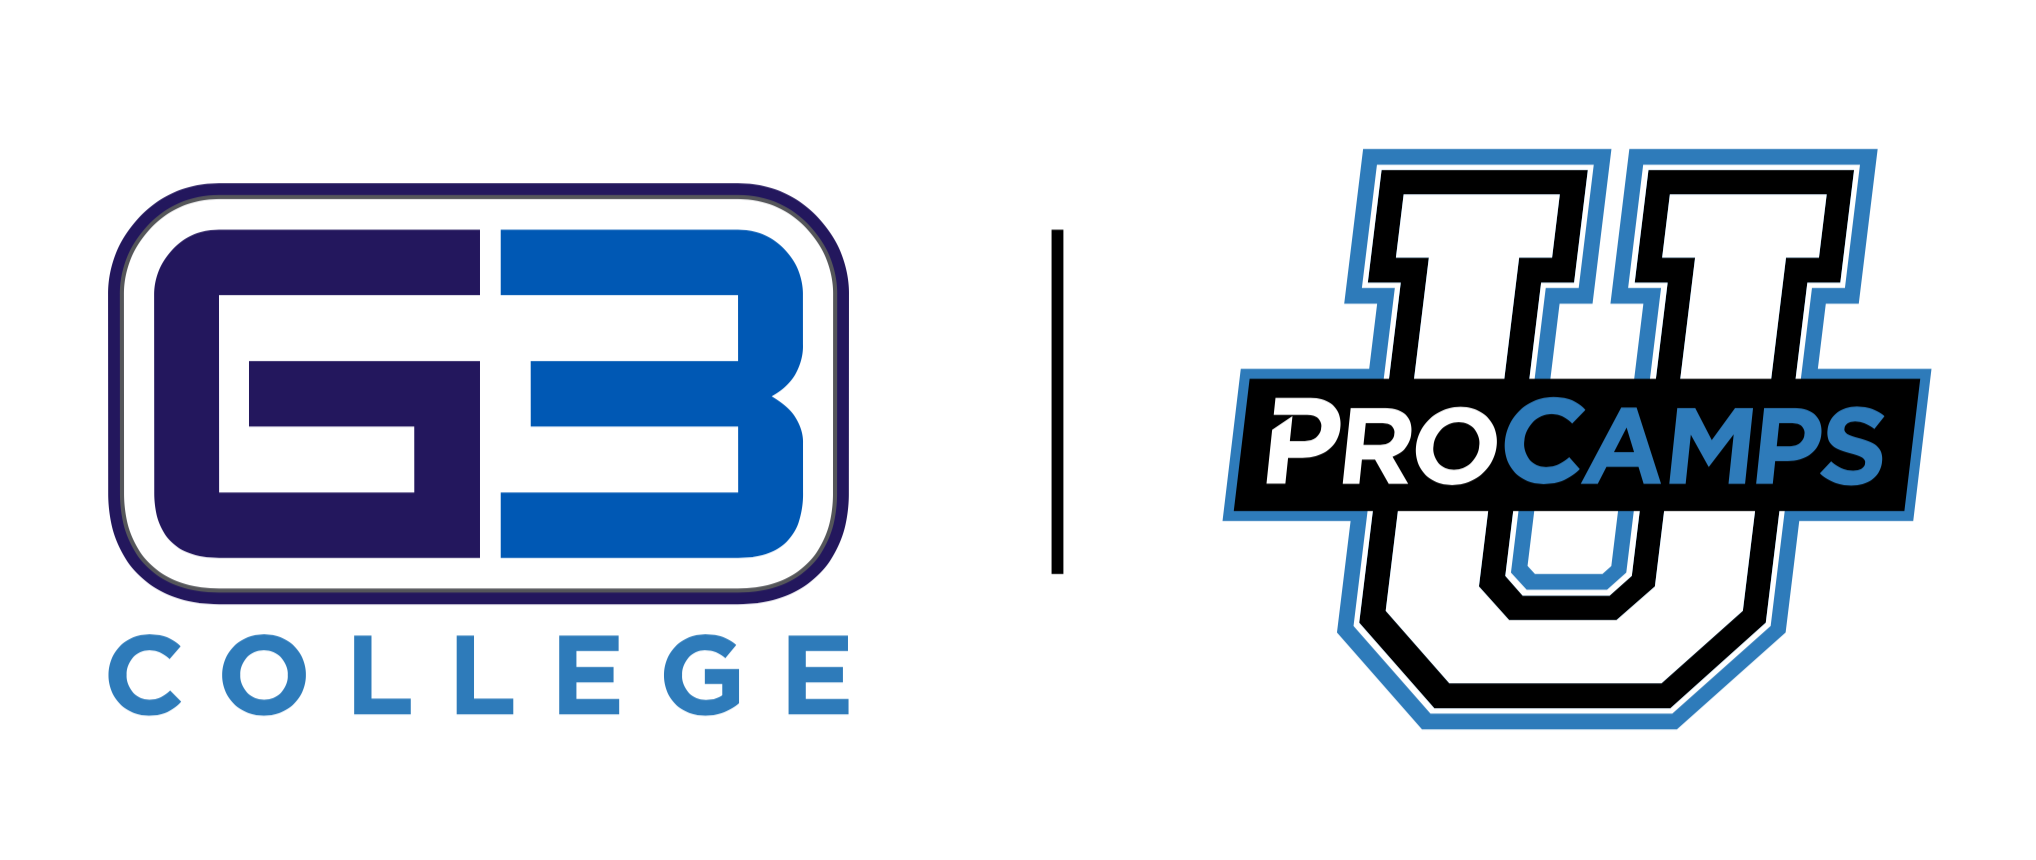 G3 College | ProCampsU Logos